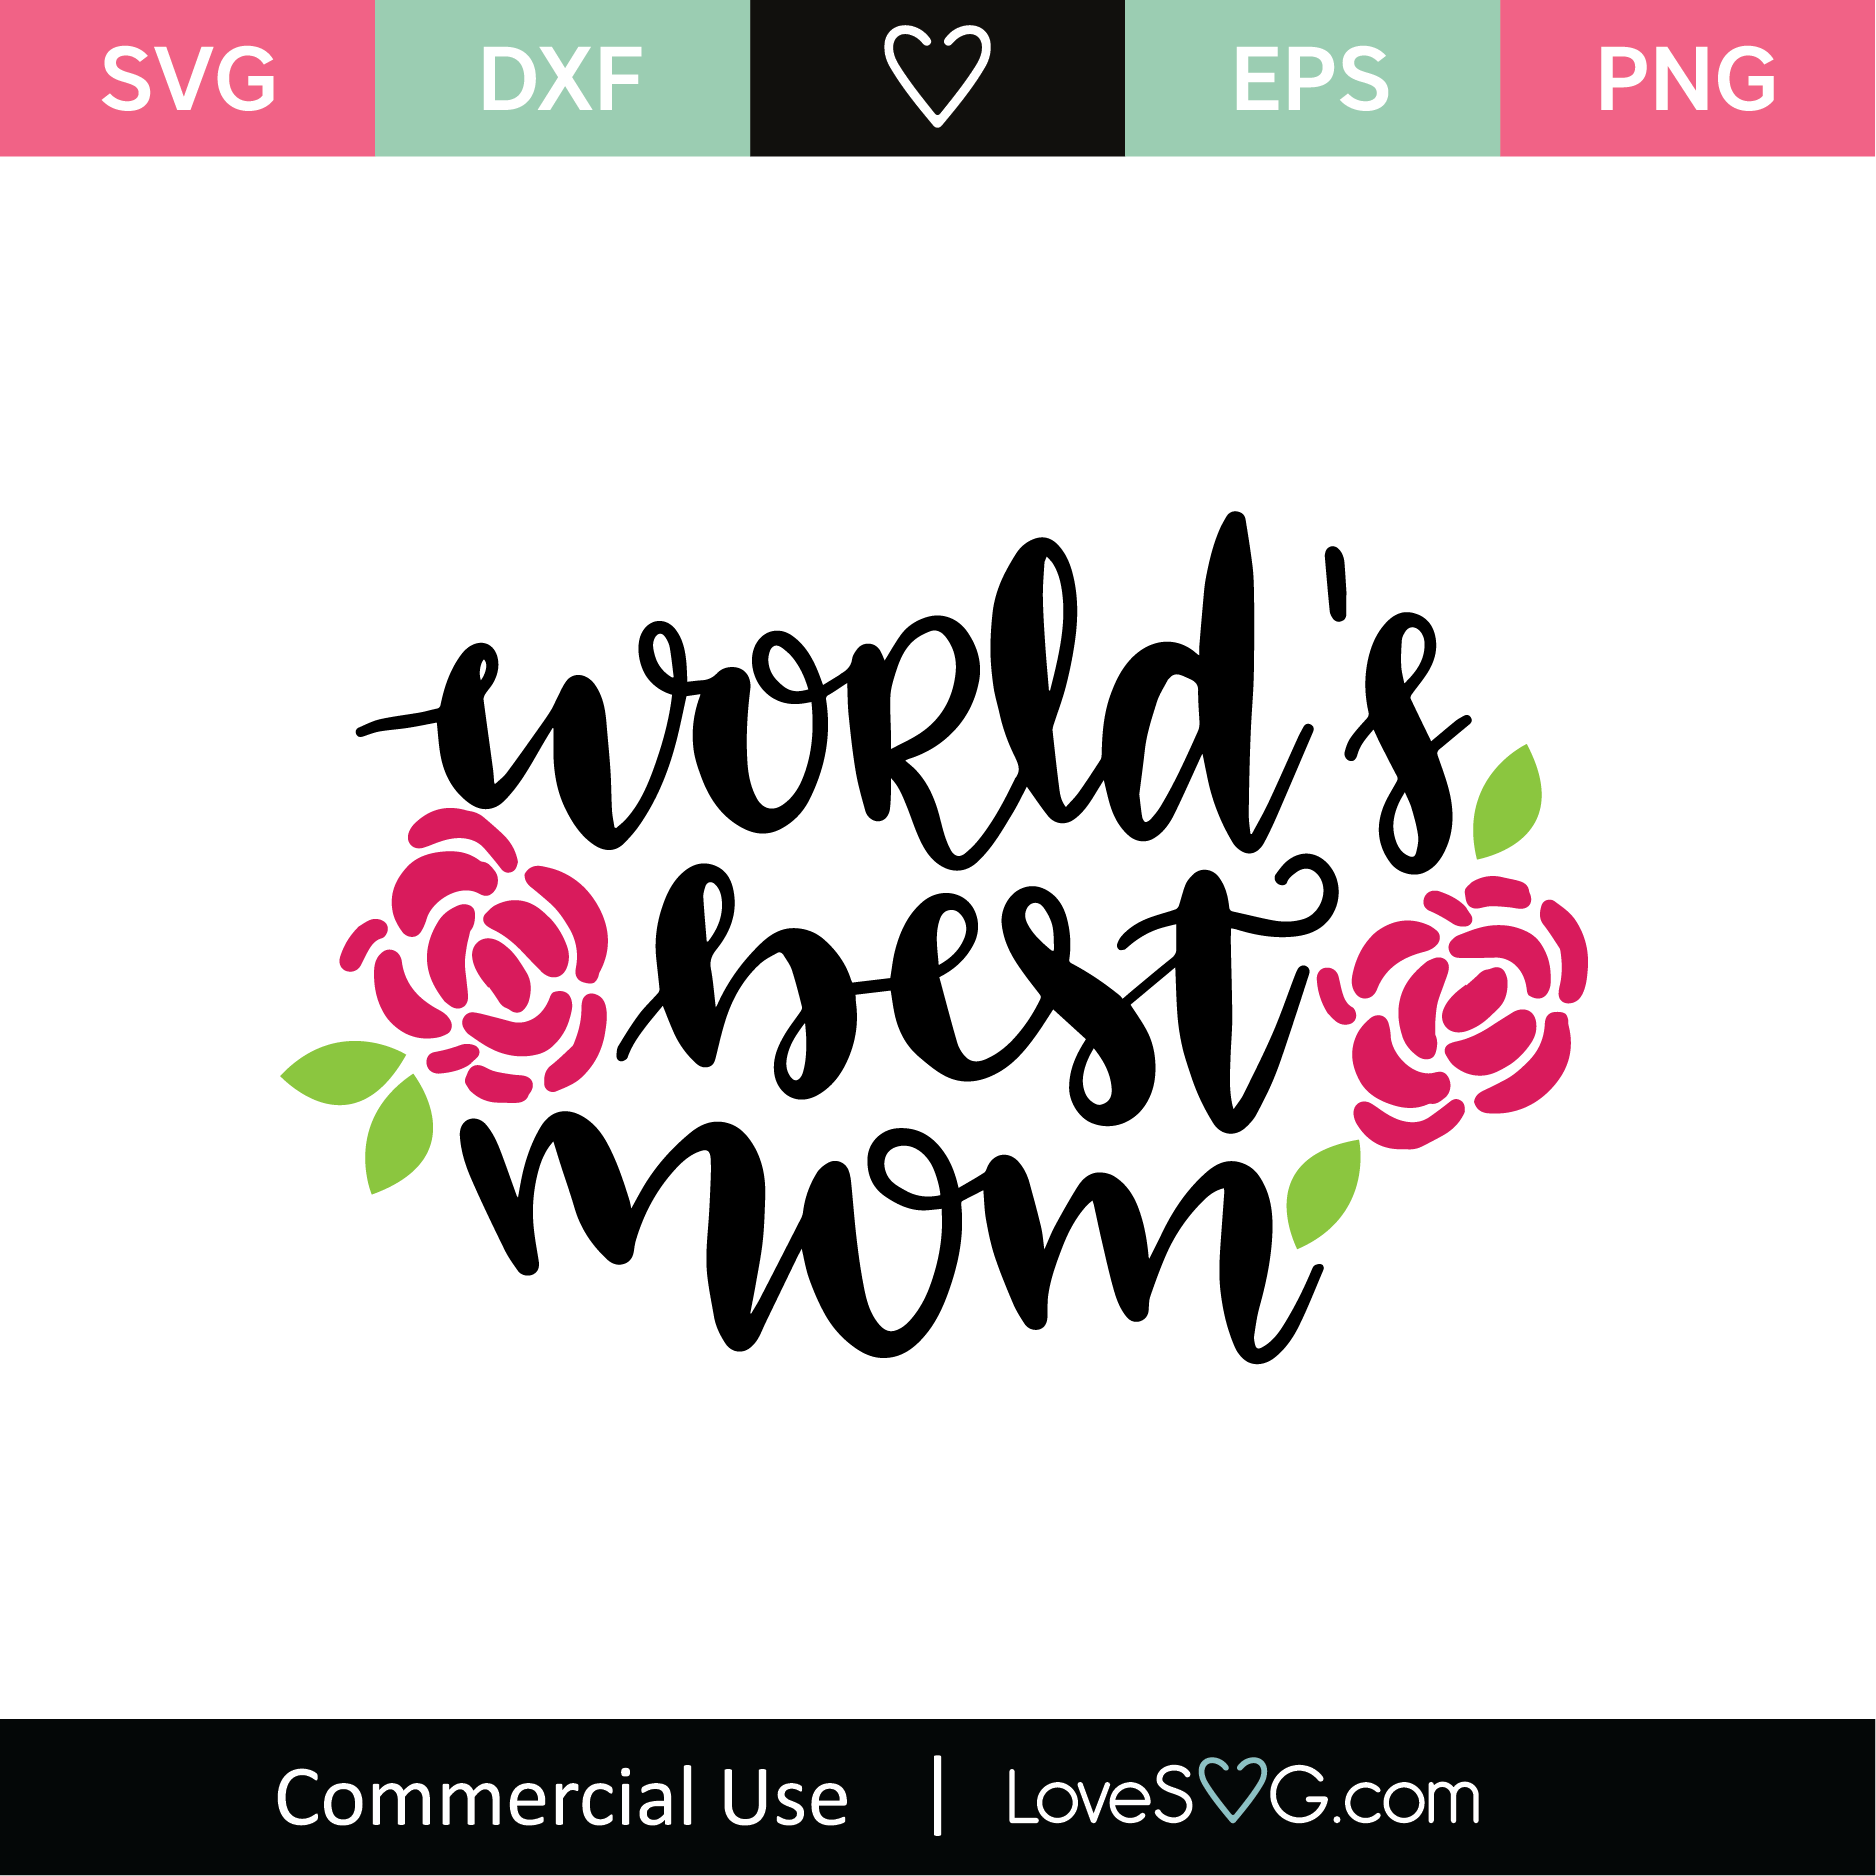 World's Best Mom SVG Cut File 2 - Lovesvg.com